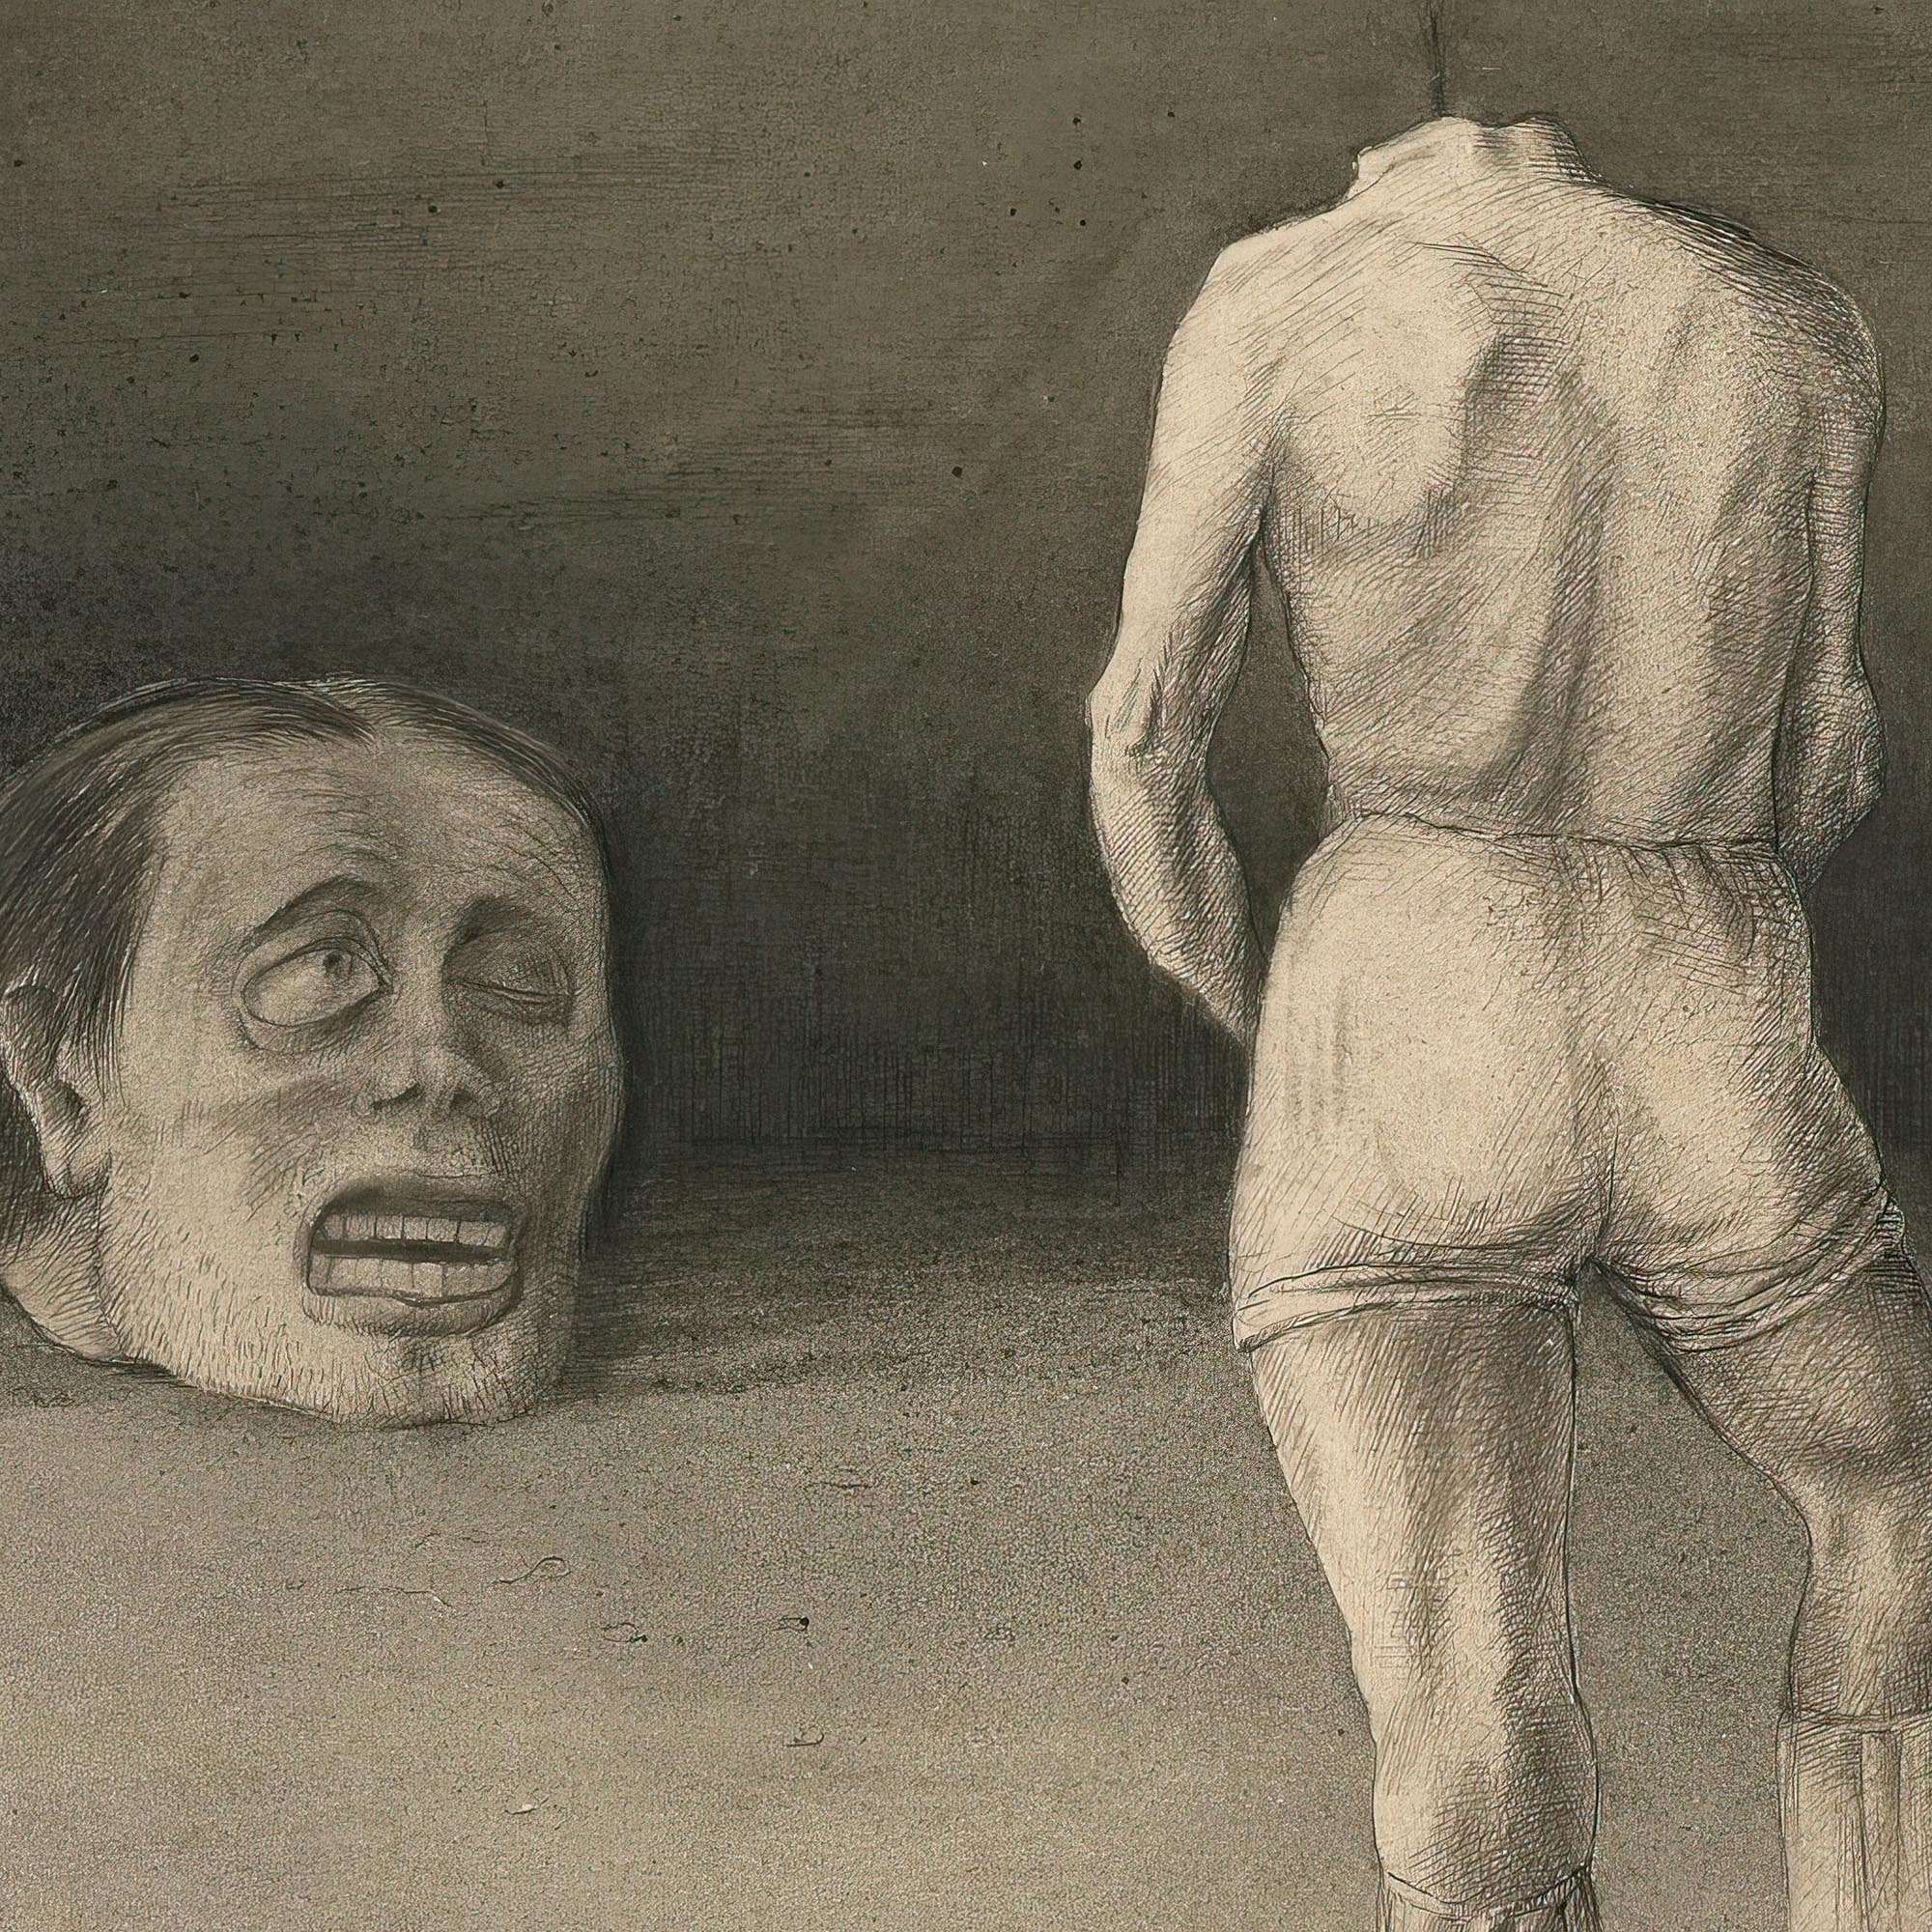 Alfred Kubin: Self Reflection, Mysterious Symbolist Art | Surreal Gothic Expressionist Fantasy Art | Strange Macabre Vintage Giclée Fine Art Print - Sacred Surreal